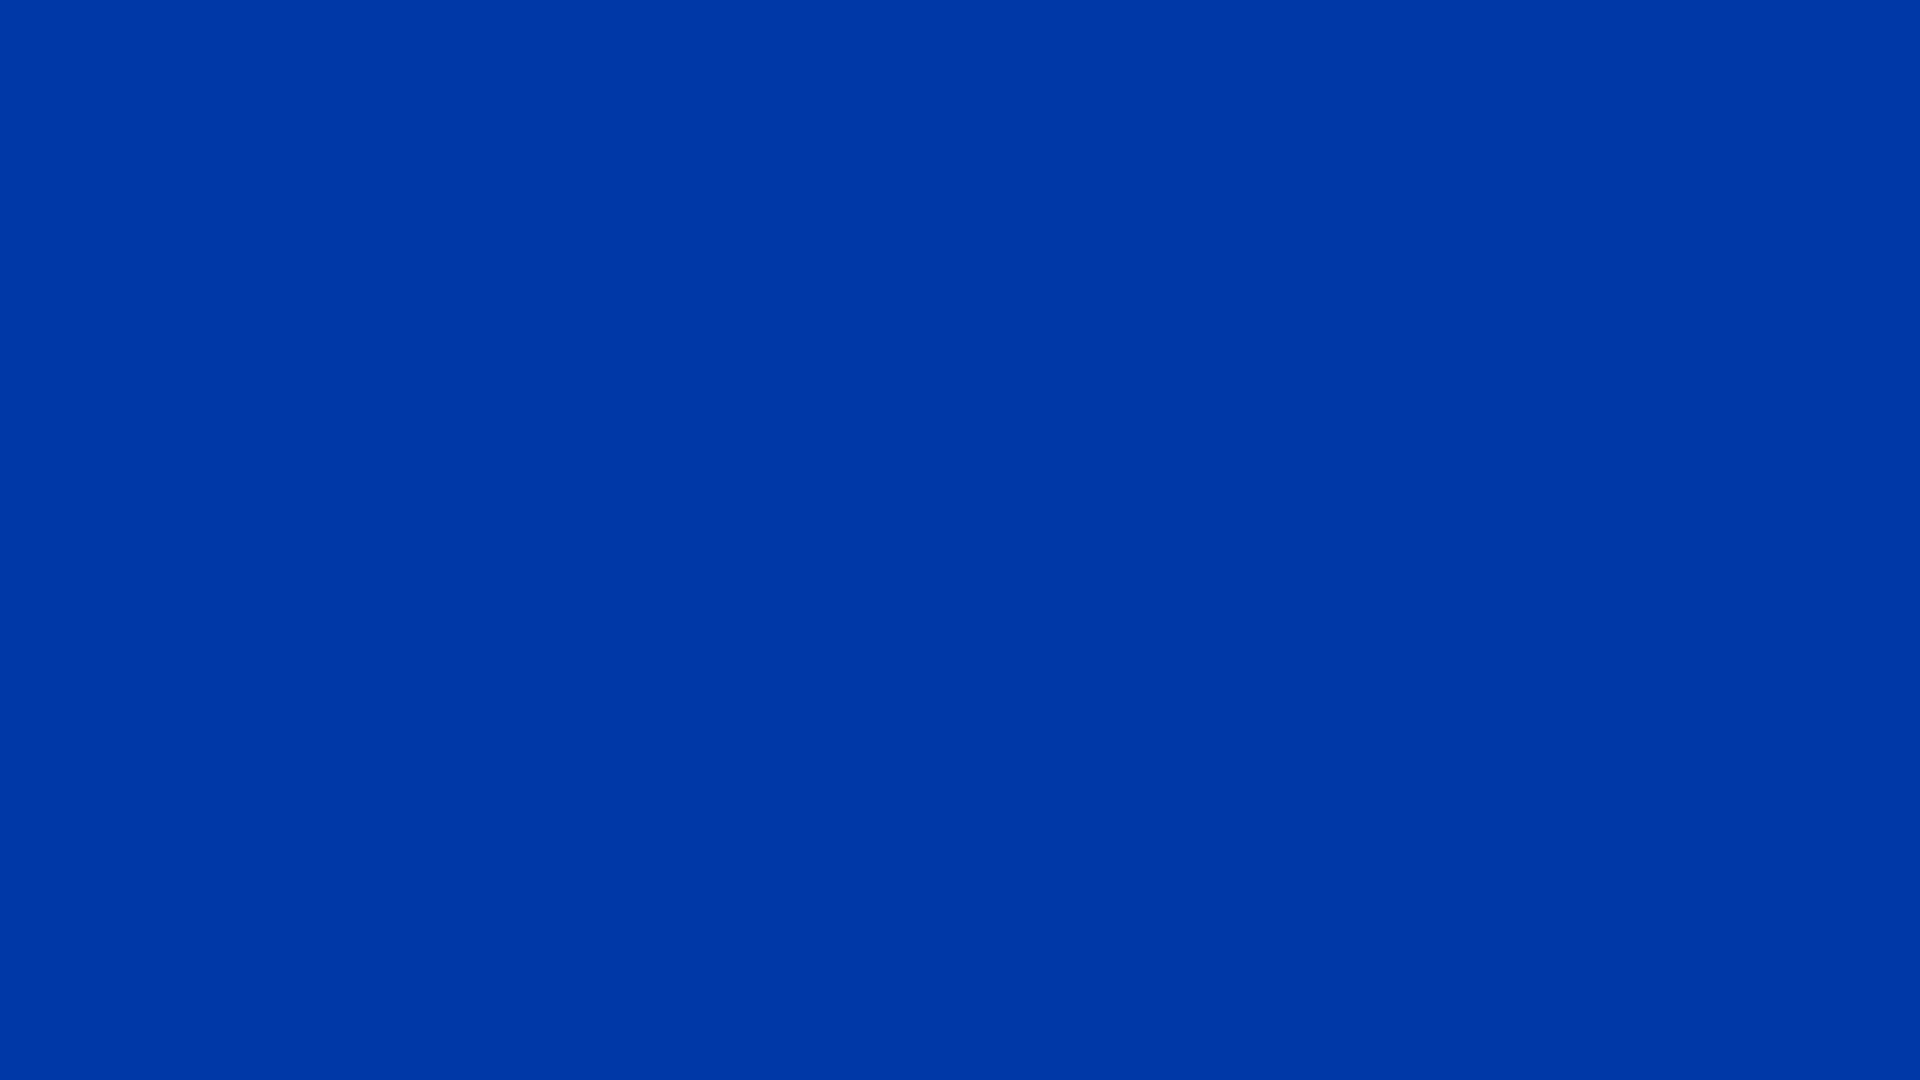 1920x1080 Royal Azure Solid Color Background